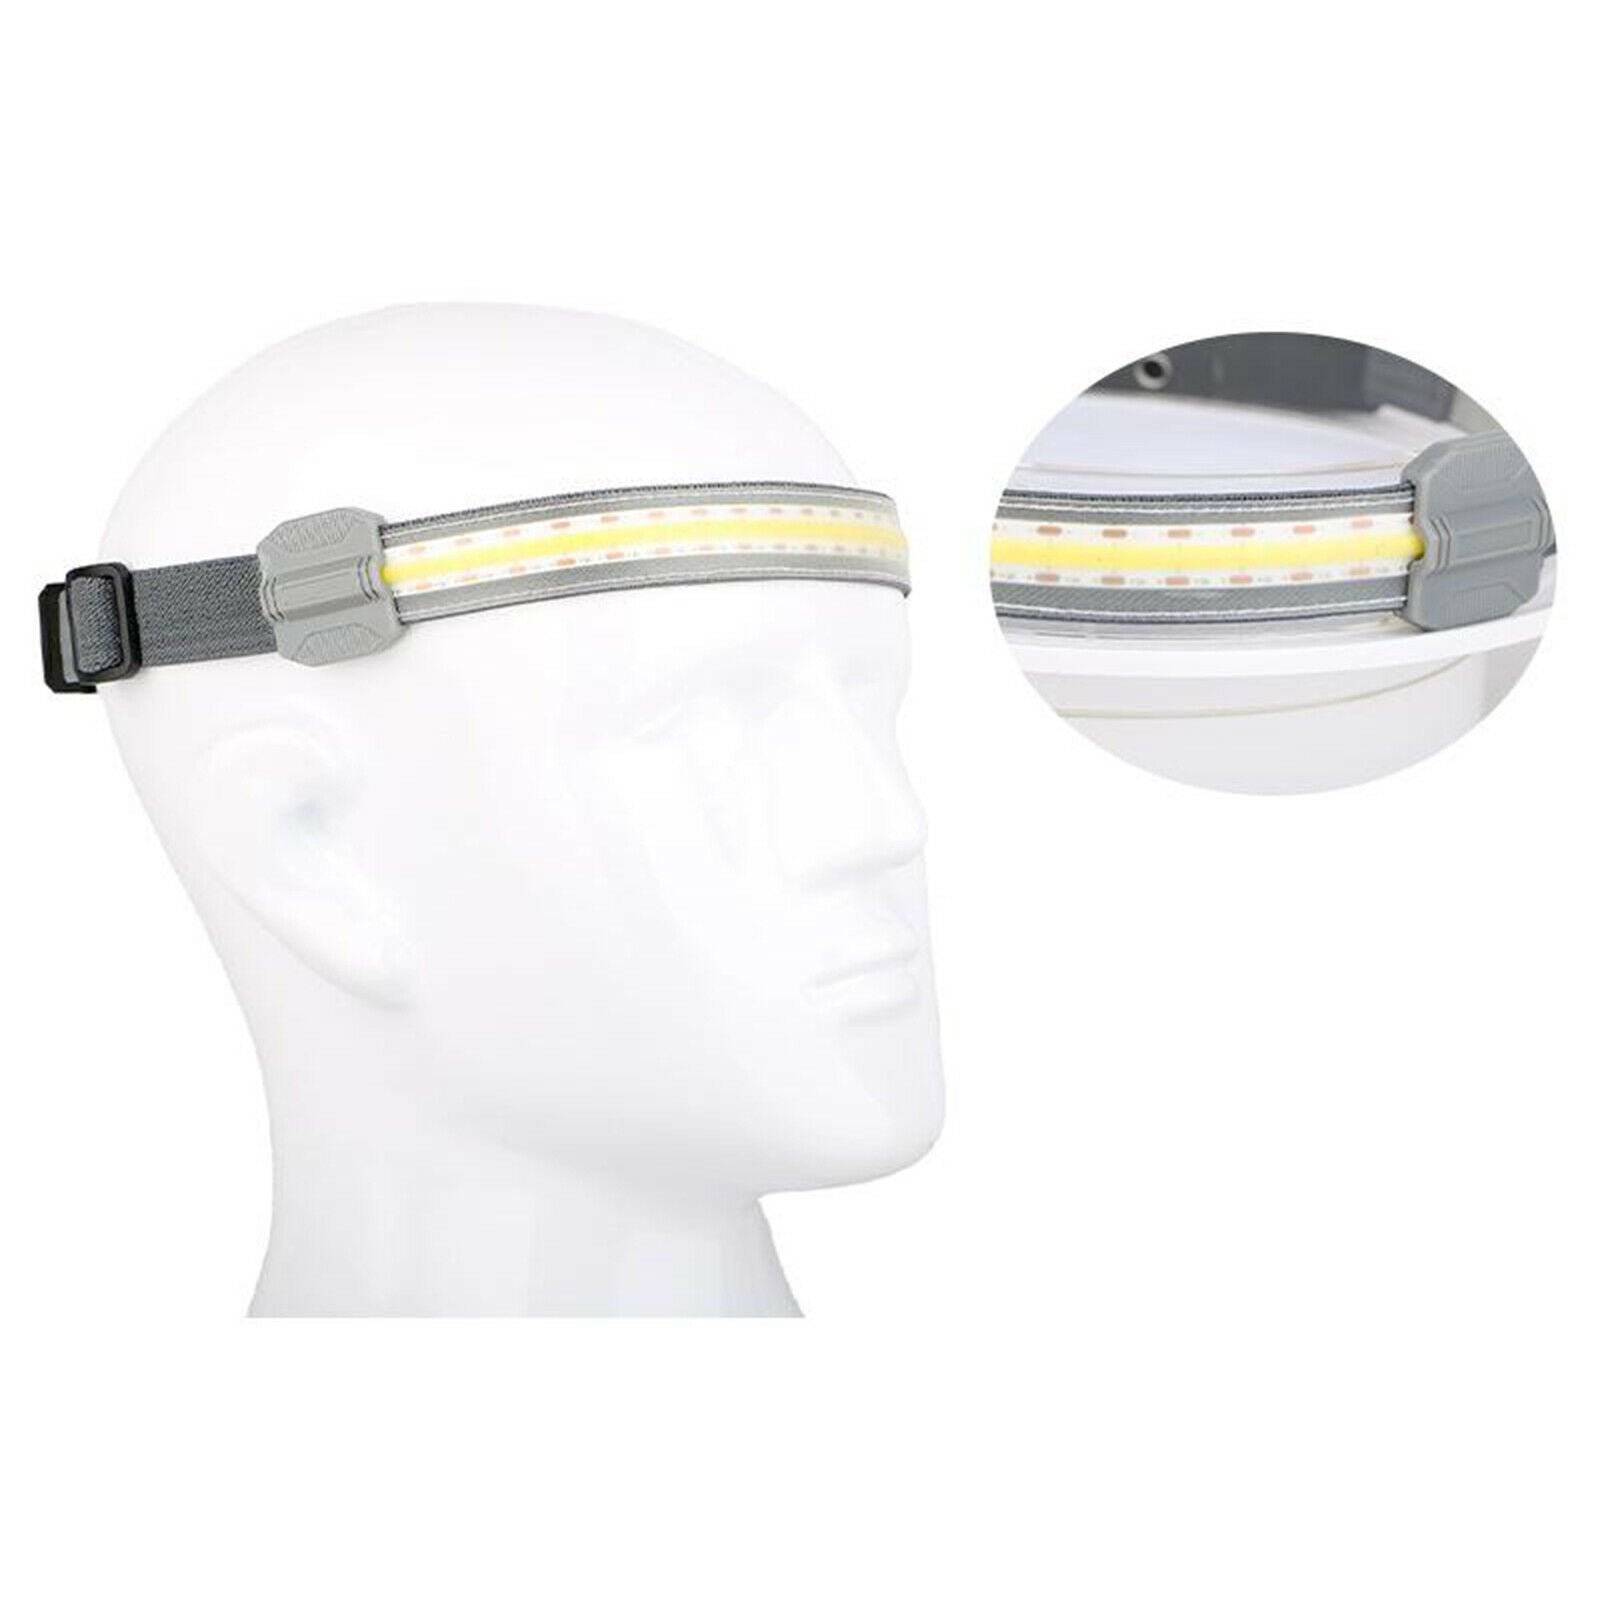 Bright Headlamp Flashlight, USB Rechargeable LED 3-mode Headlights, Head Lamp